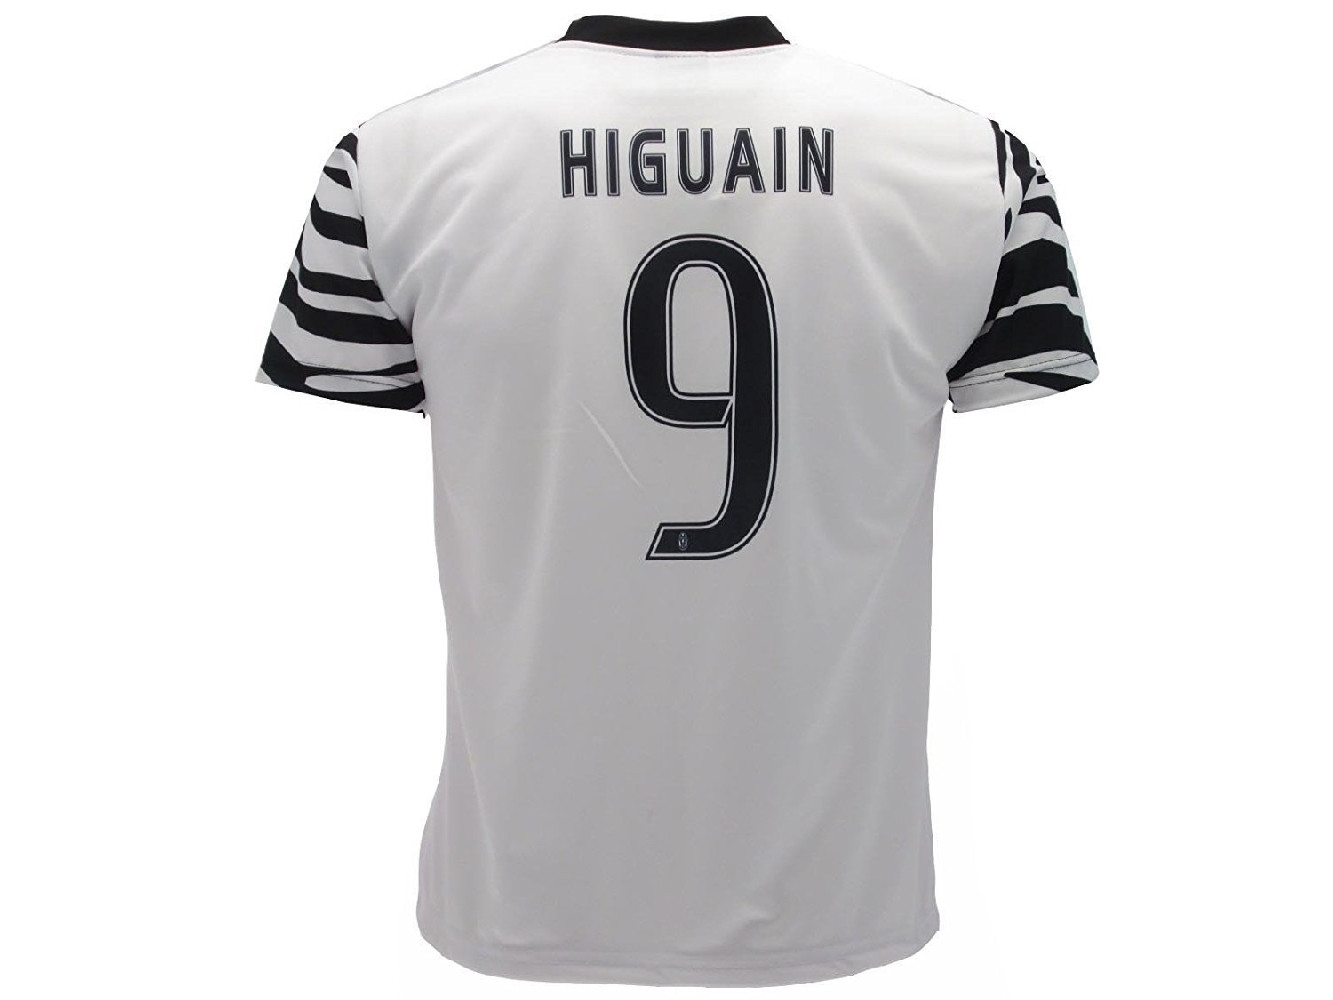 Maglia Uomo Higuain Calcio Juve PS 24629 Replica Ufficiale Juventus | Pelusciamo.com